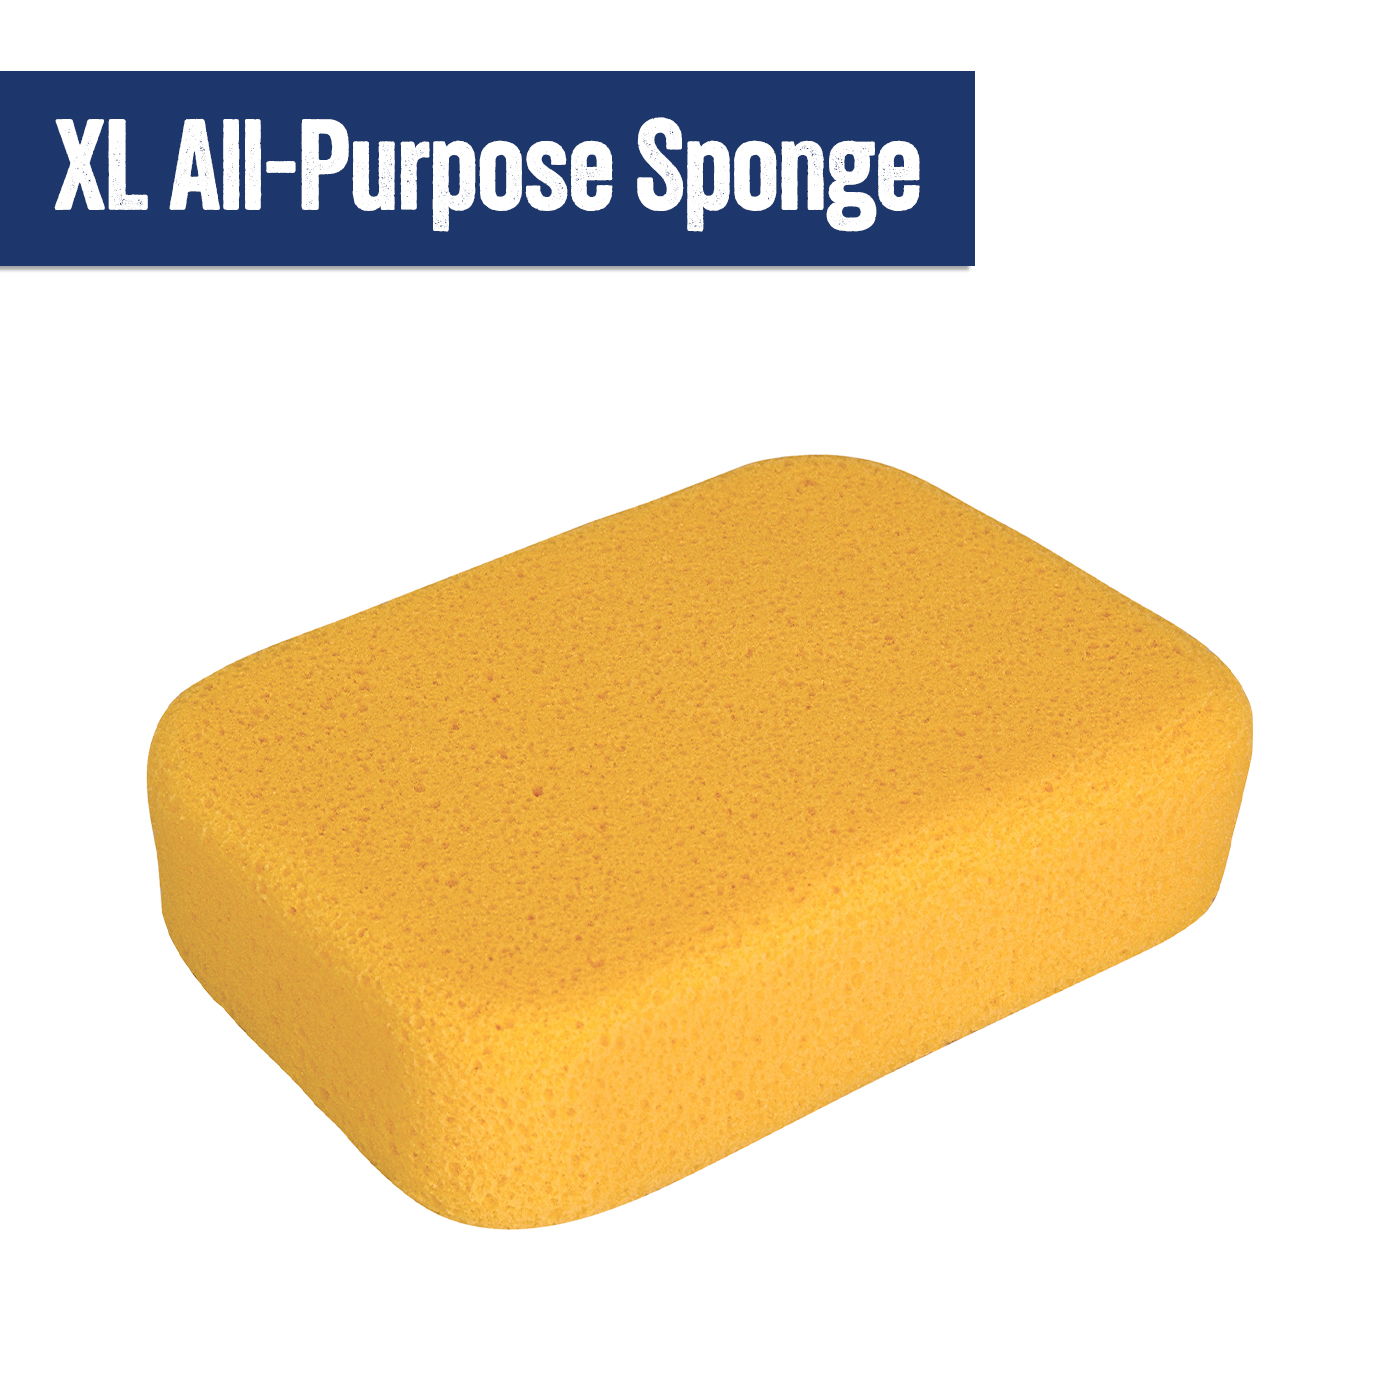 XL All-Purpose Sponge